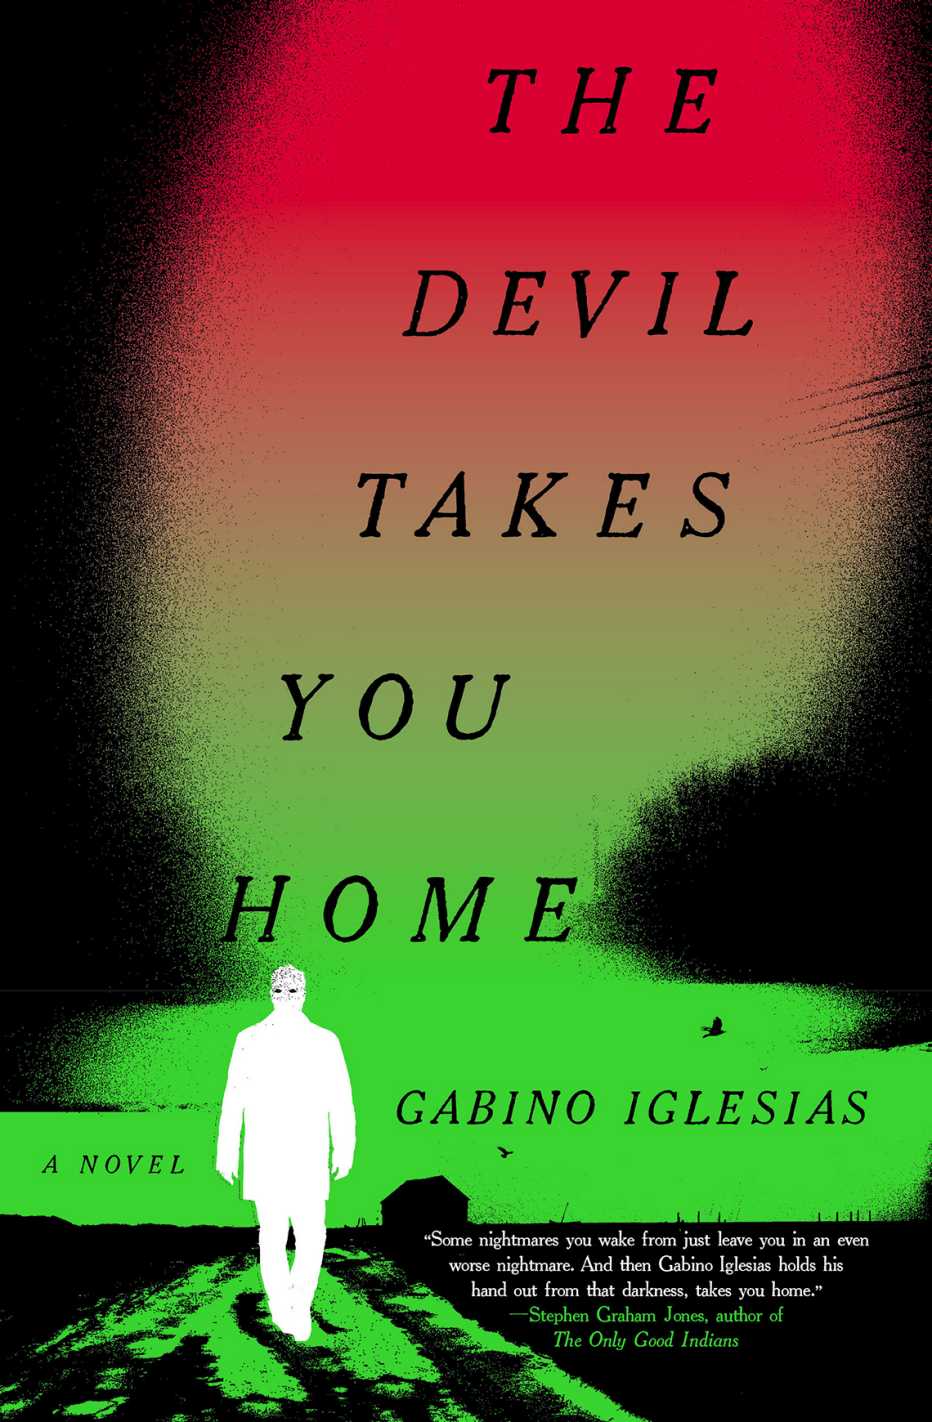 The Devil Takes You Home by Gabino Iglesias